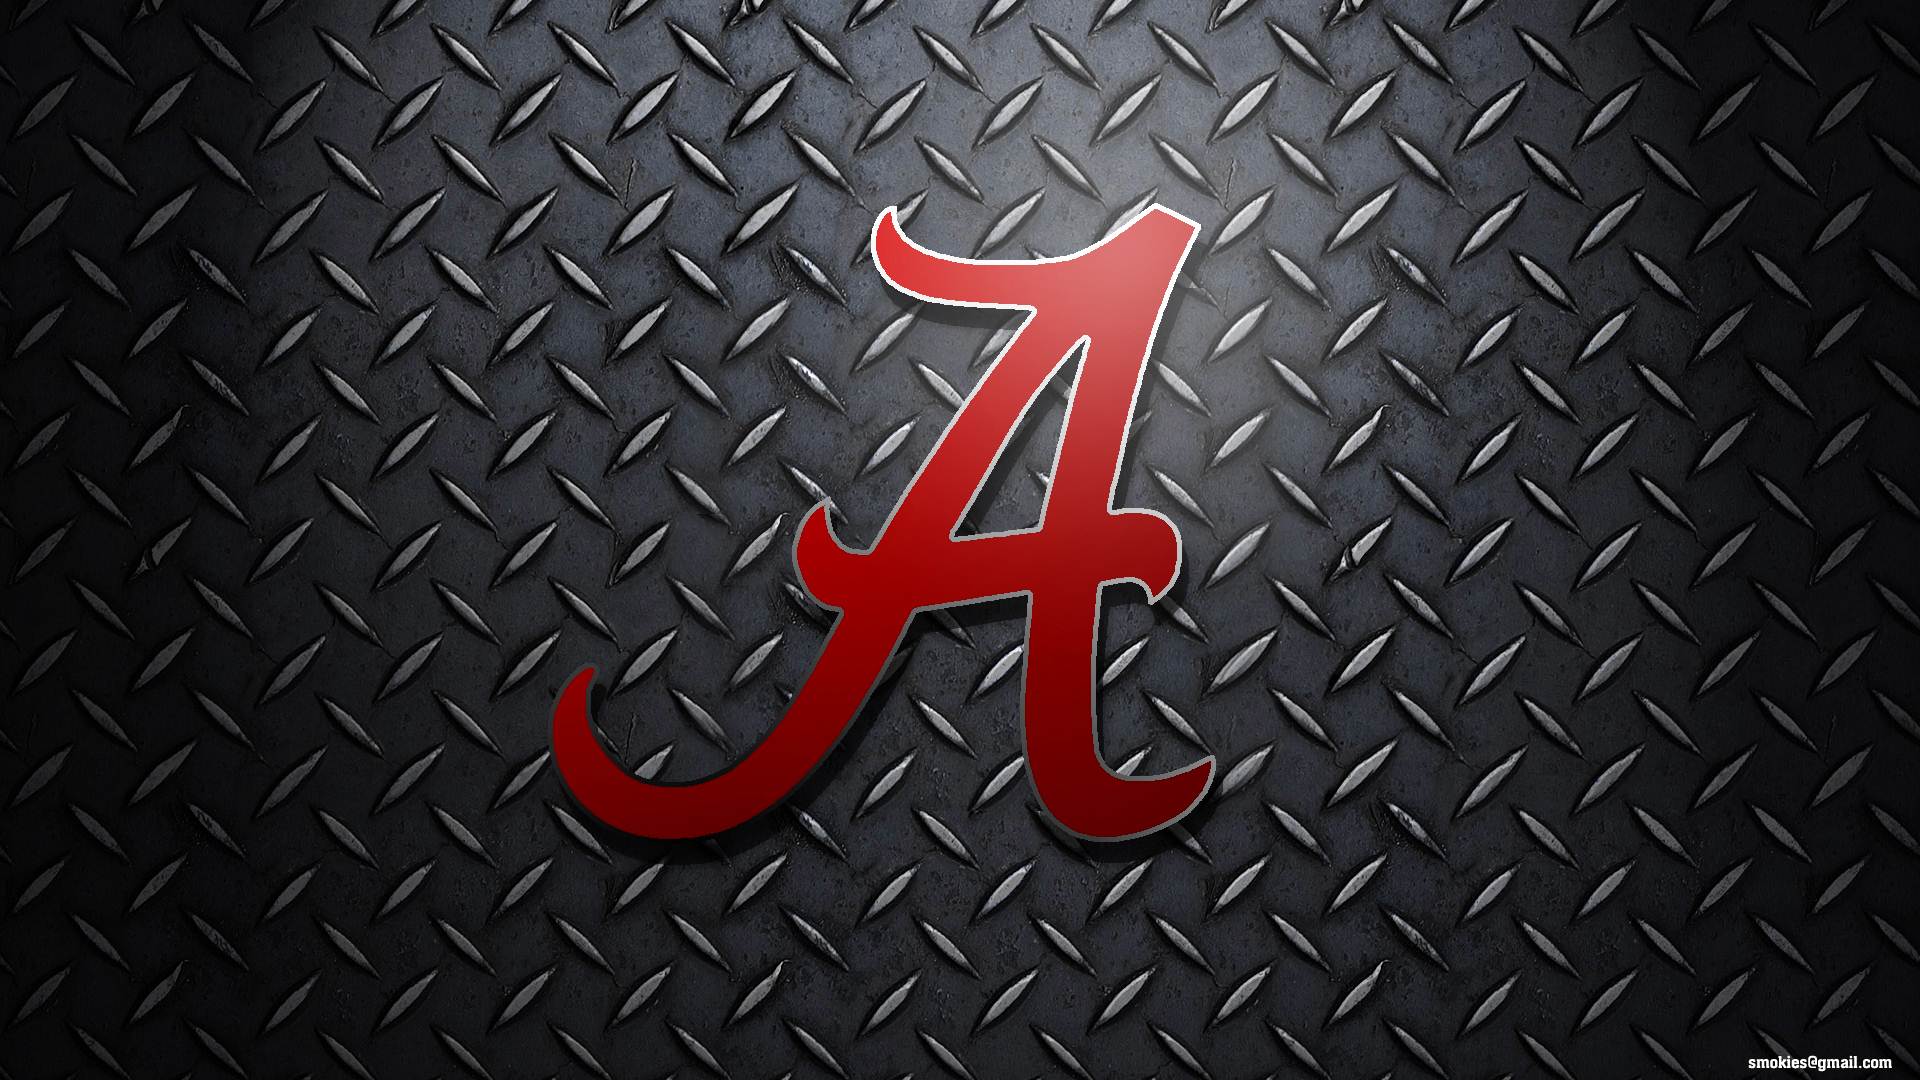 Alabama Football Desktop Wallpaper similar Image and photo